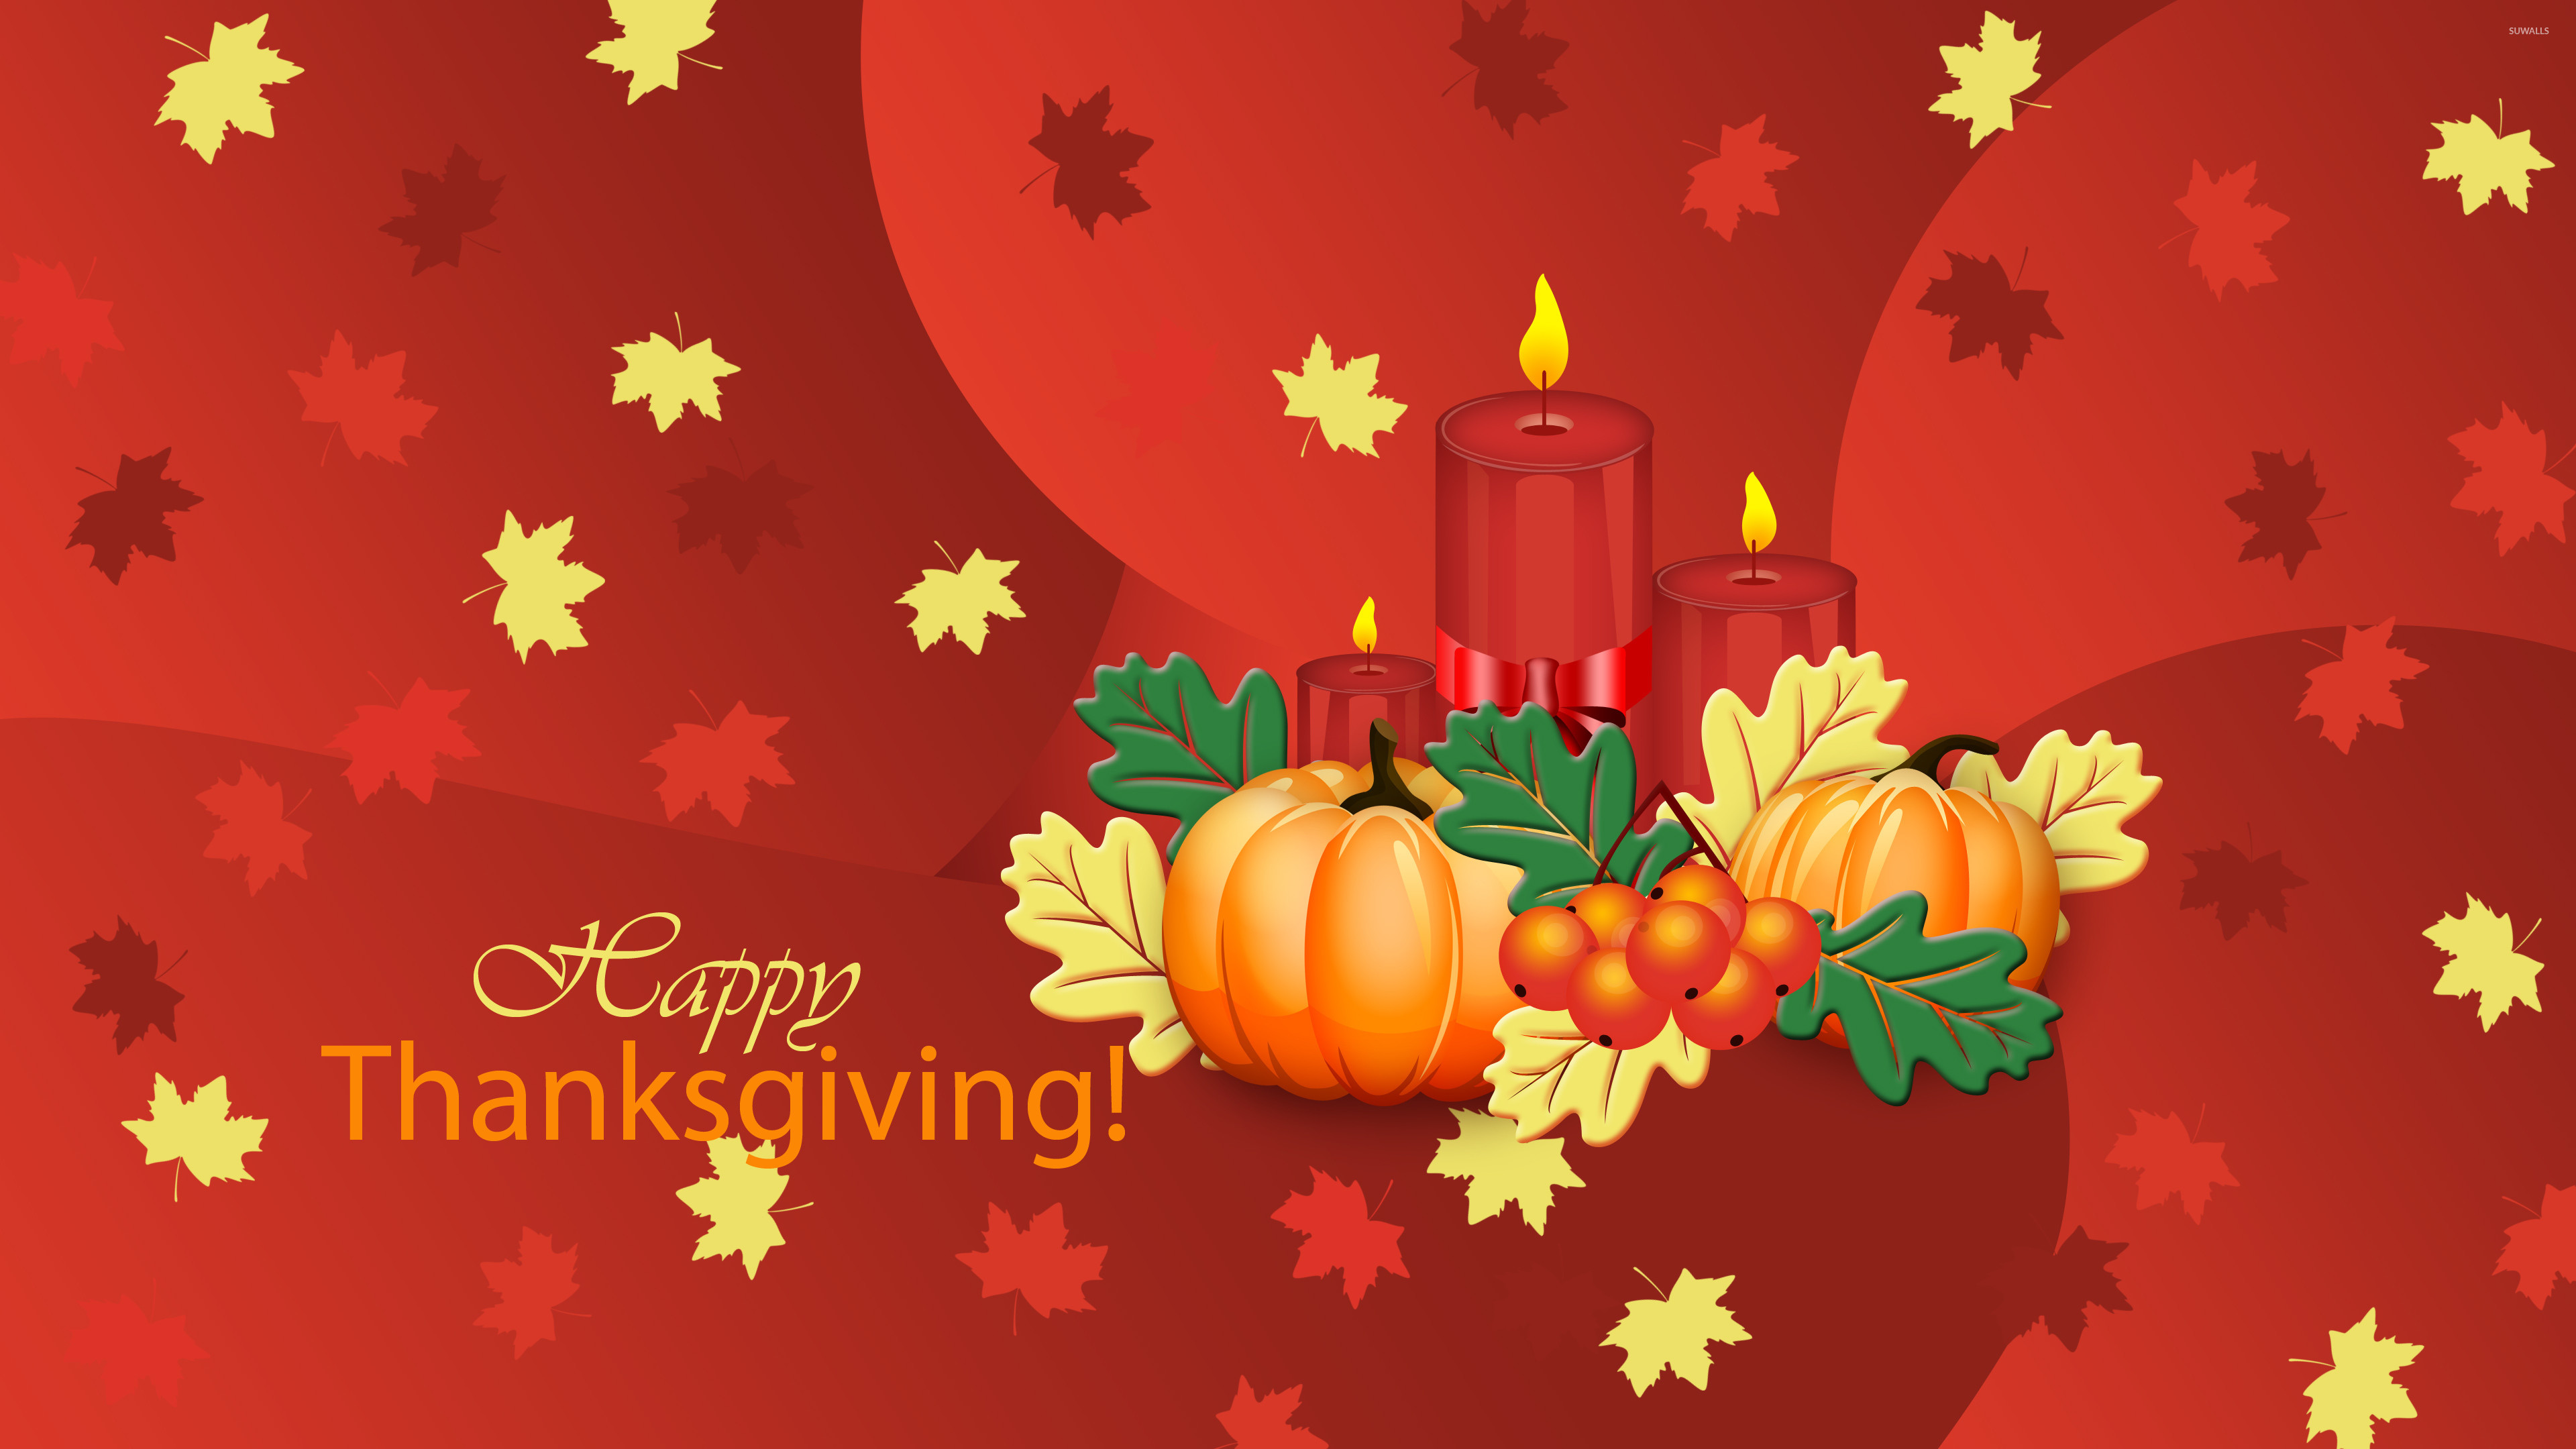 Pumpkins and candles on Thanksgiving wallpaper jpg